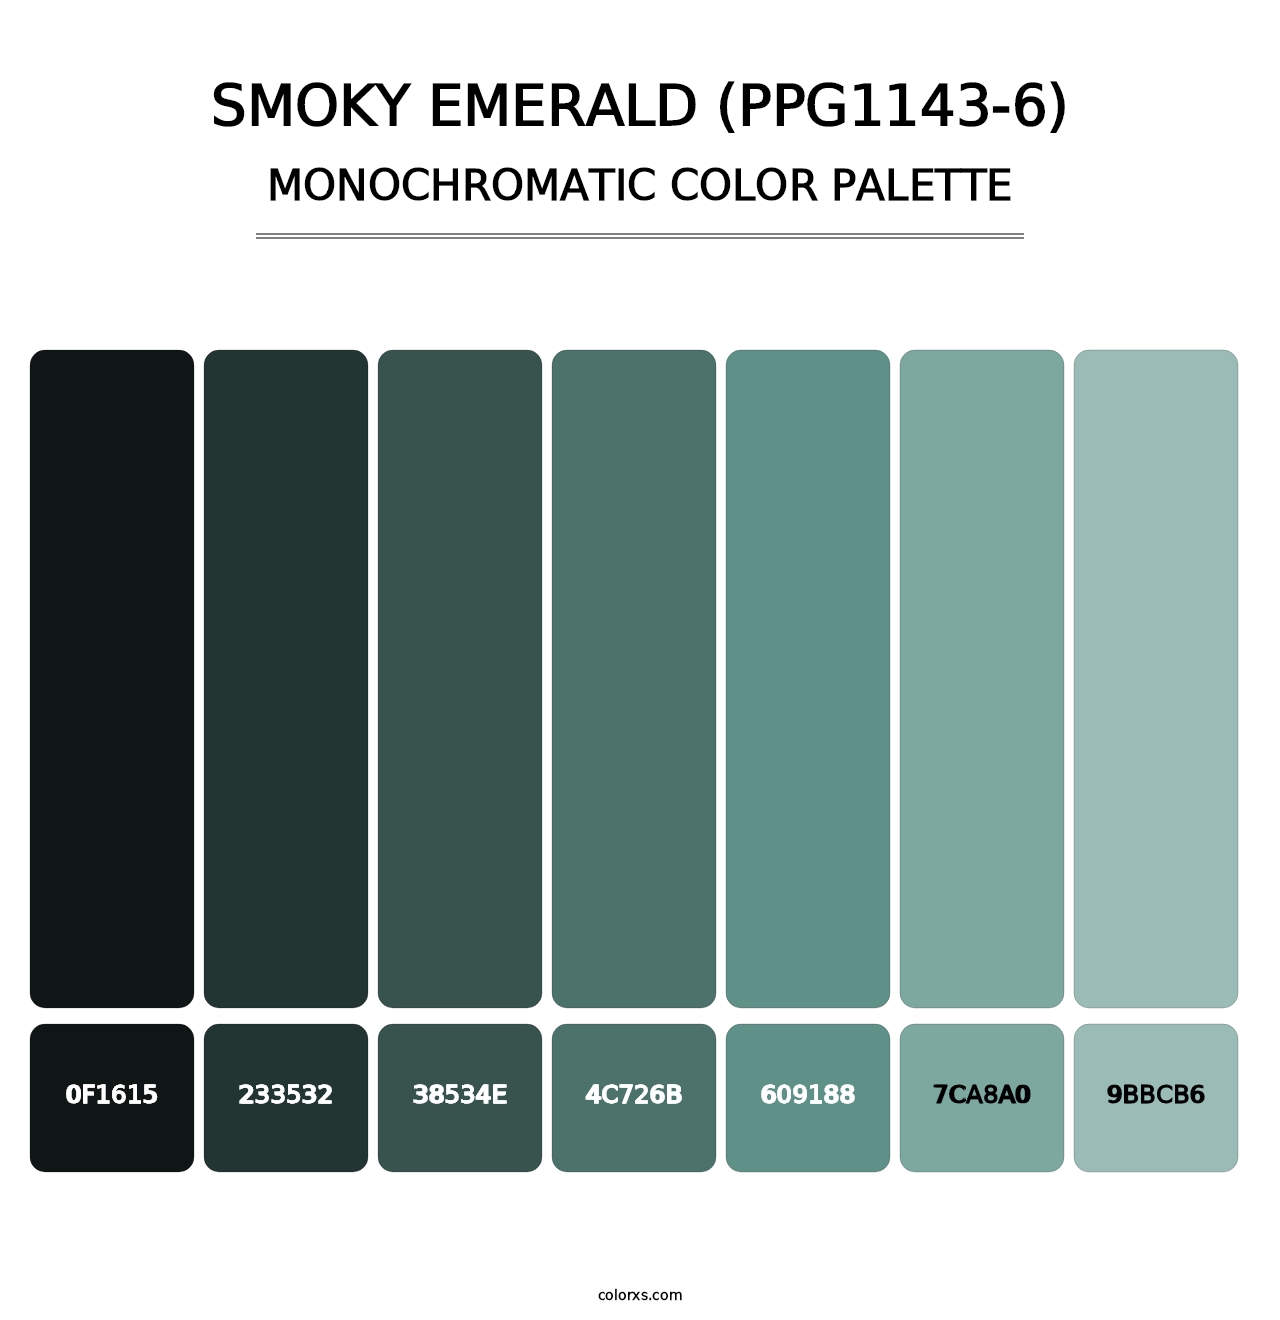 Smoky Emerald (PPG1143-6) - Monochromatic Color Palette